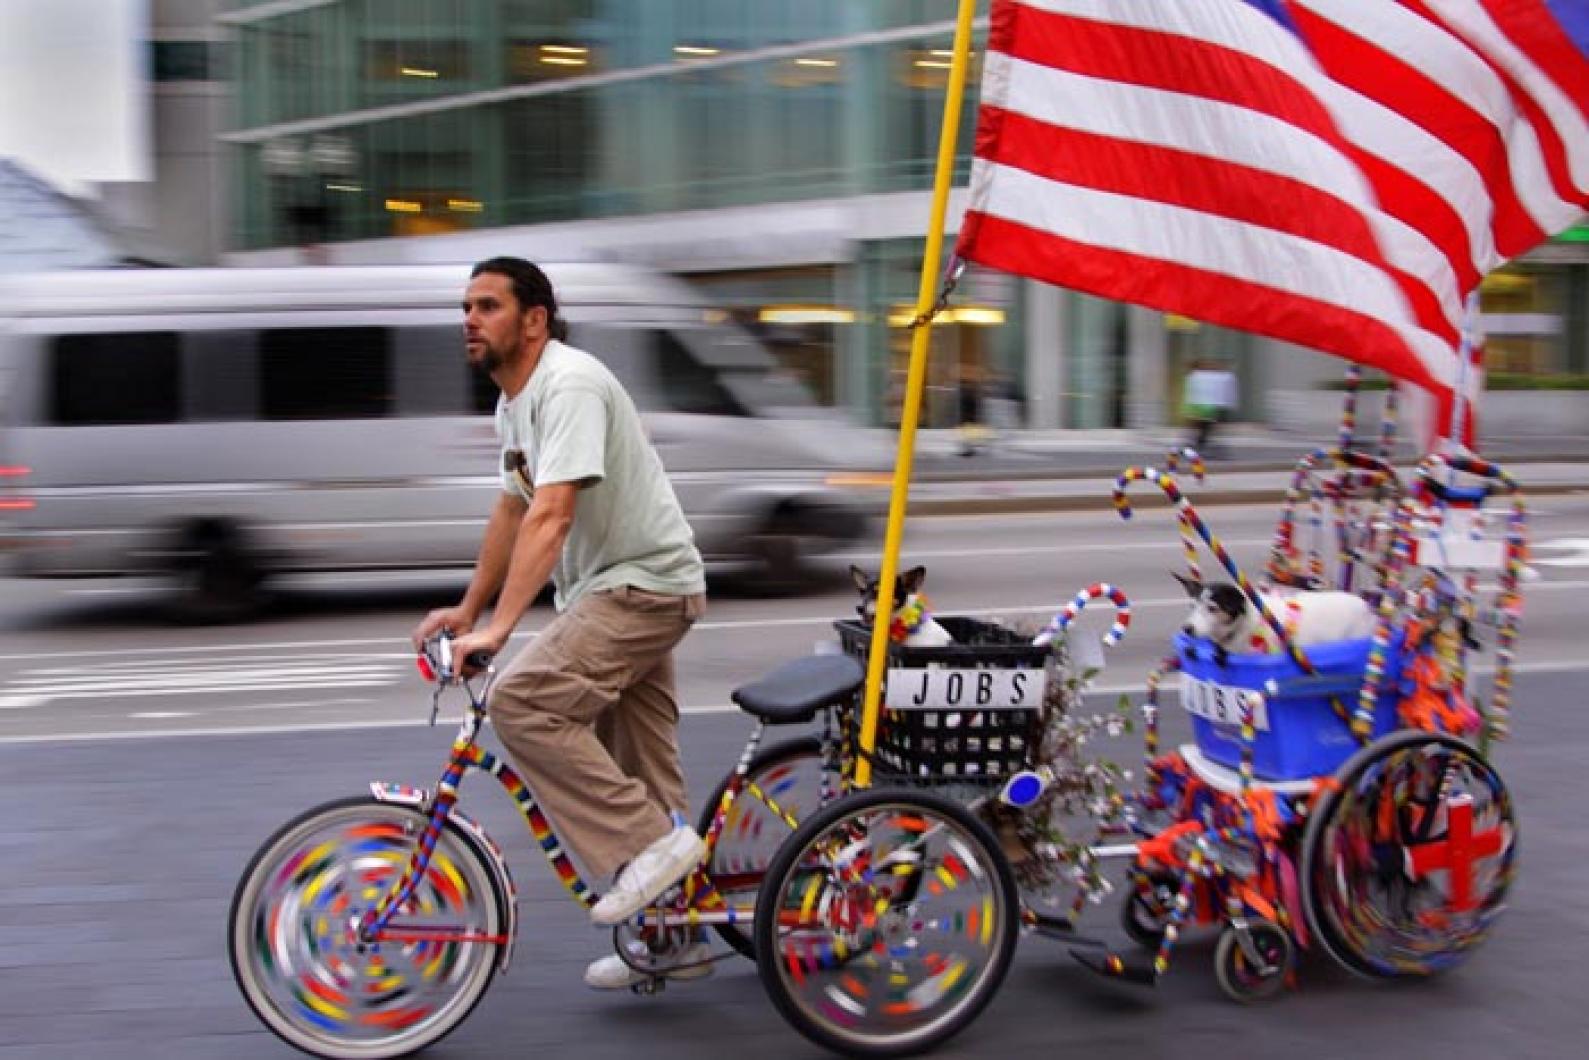 American Flag bicycle trailer